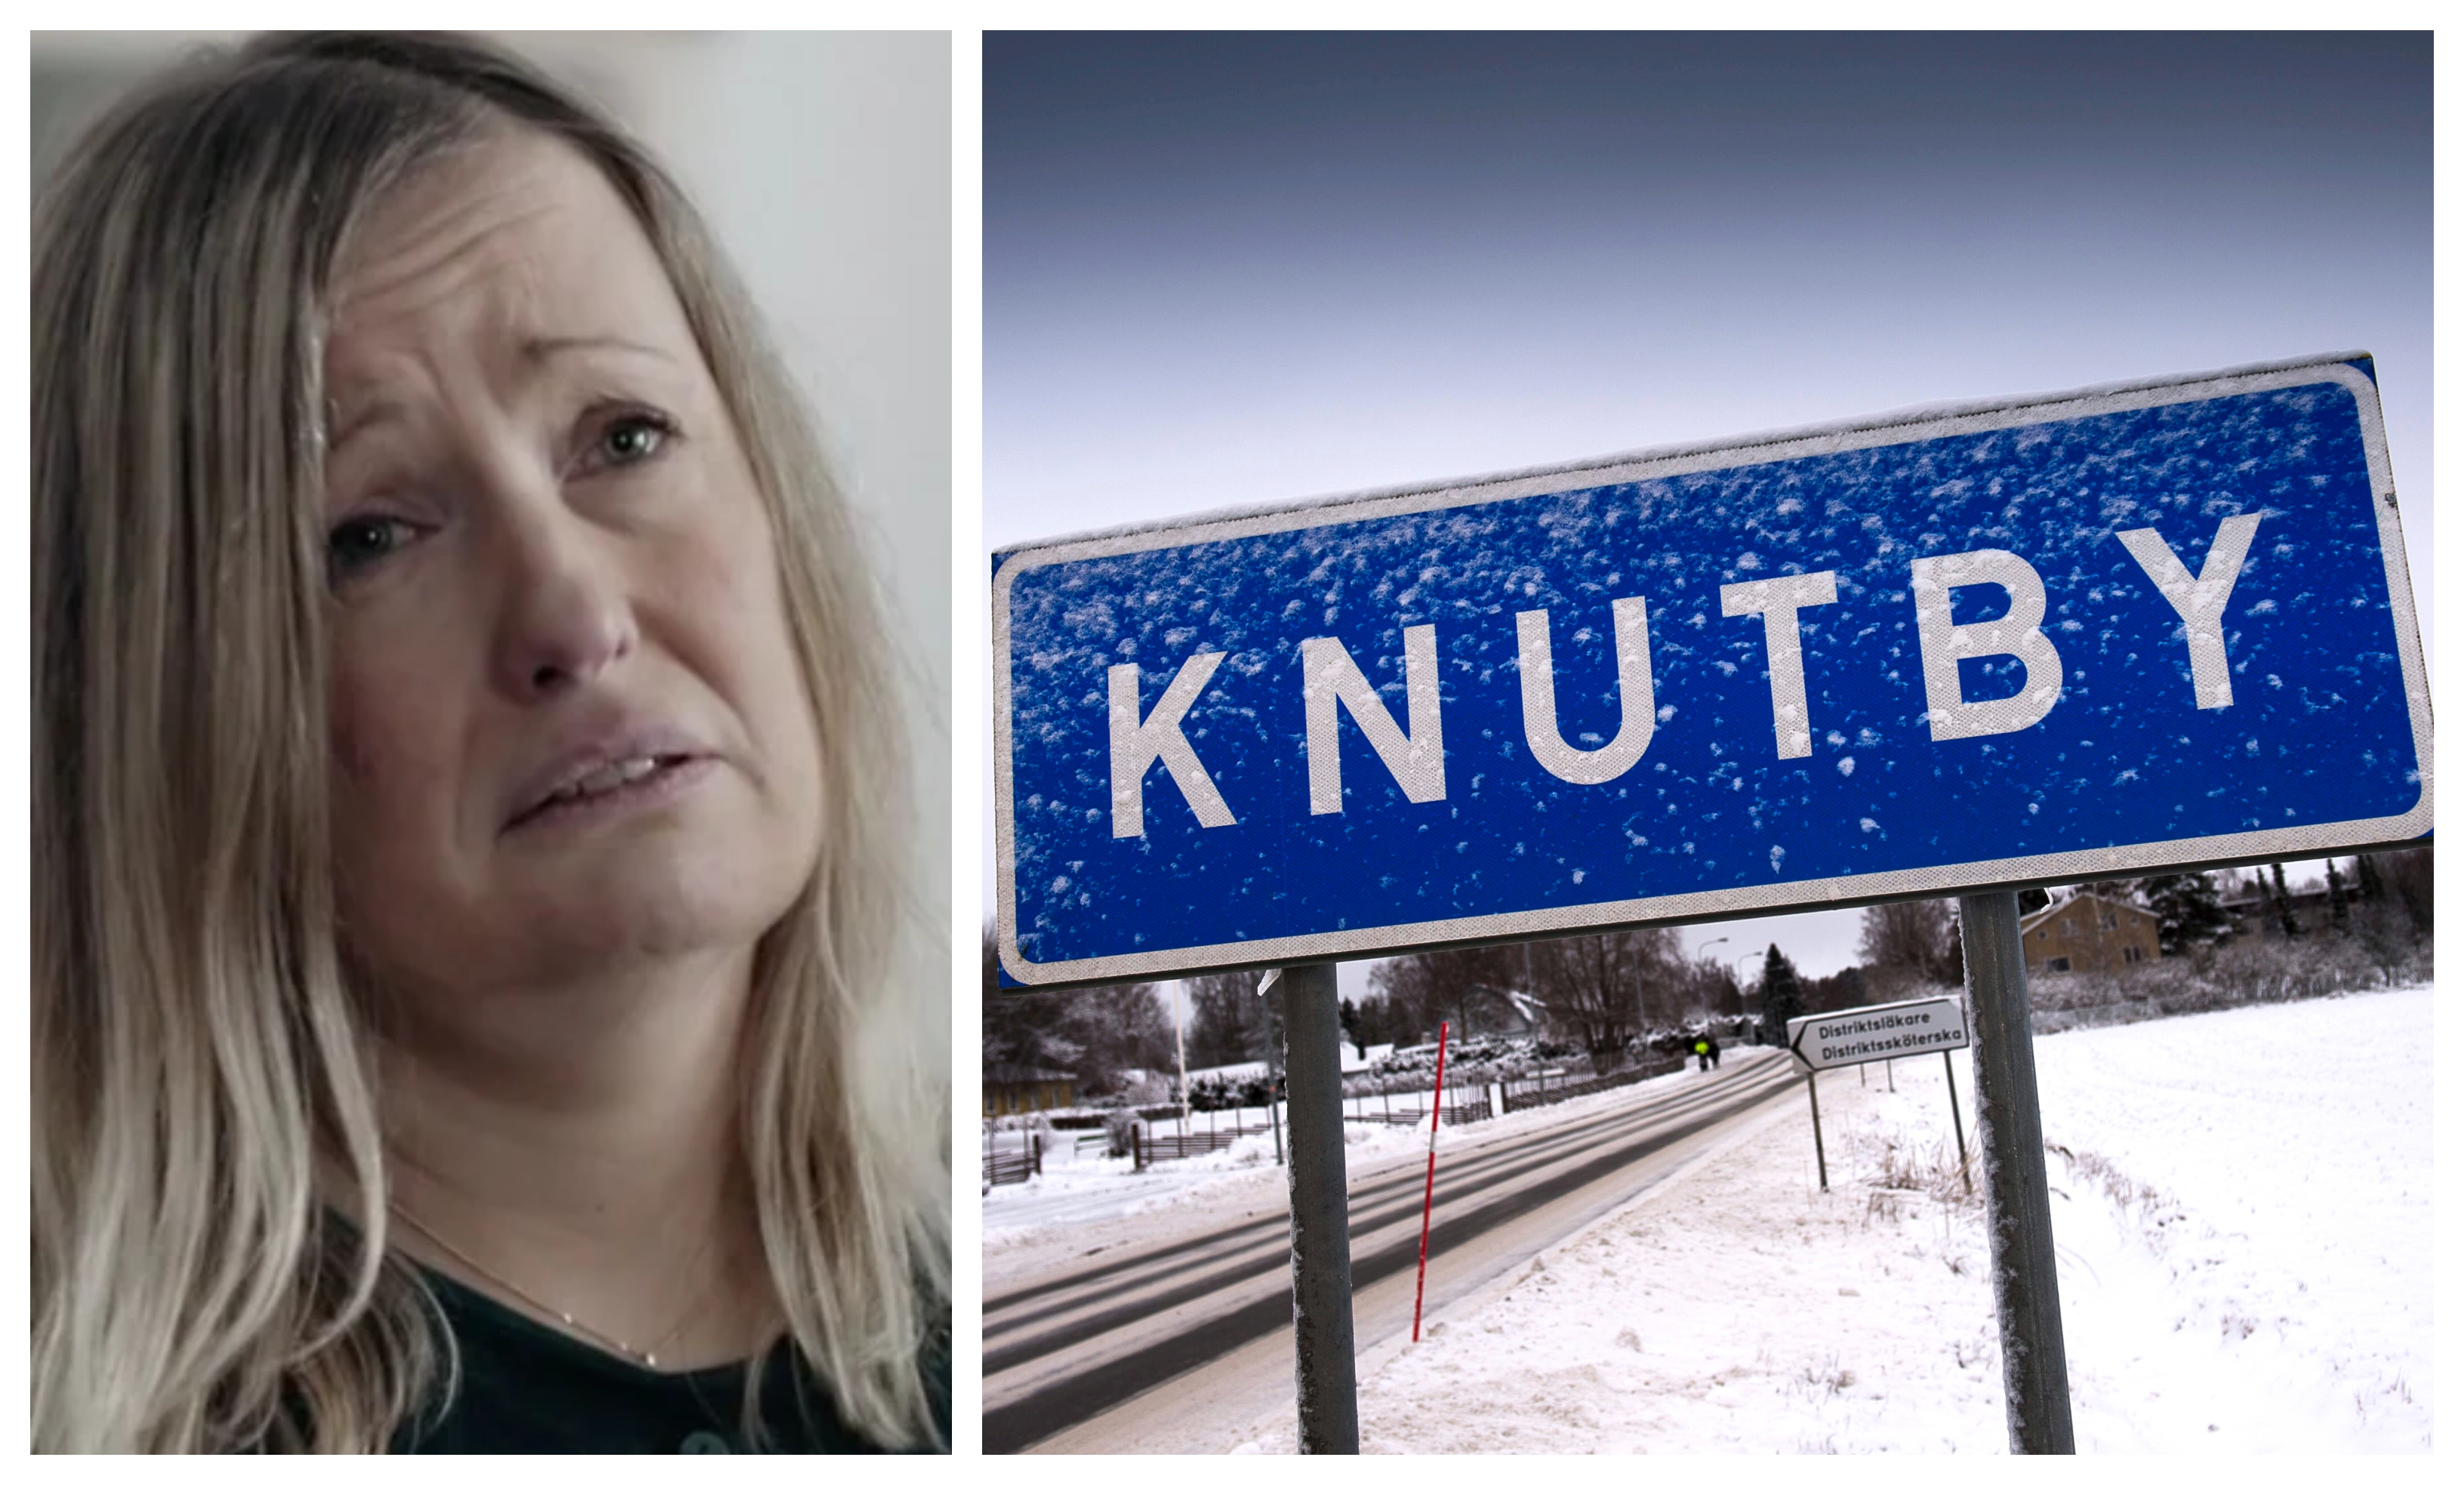 Mordet i Knutby, Sara Svensson